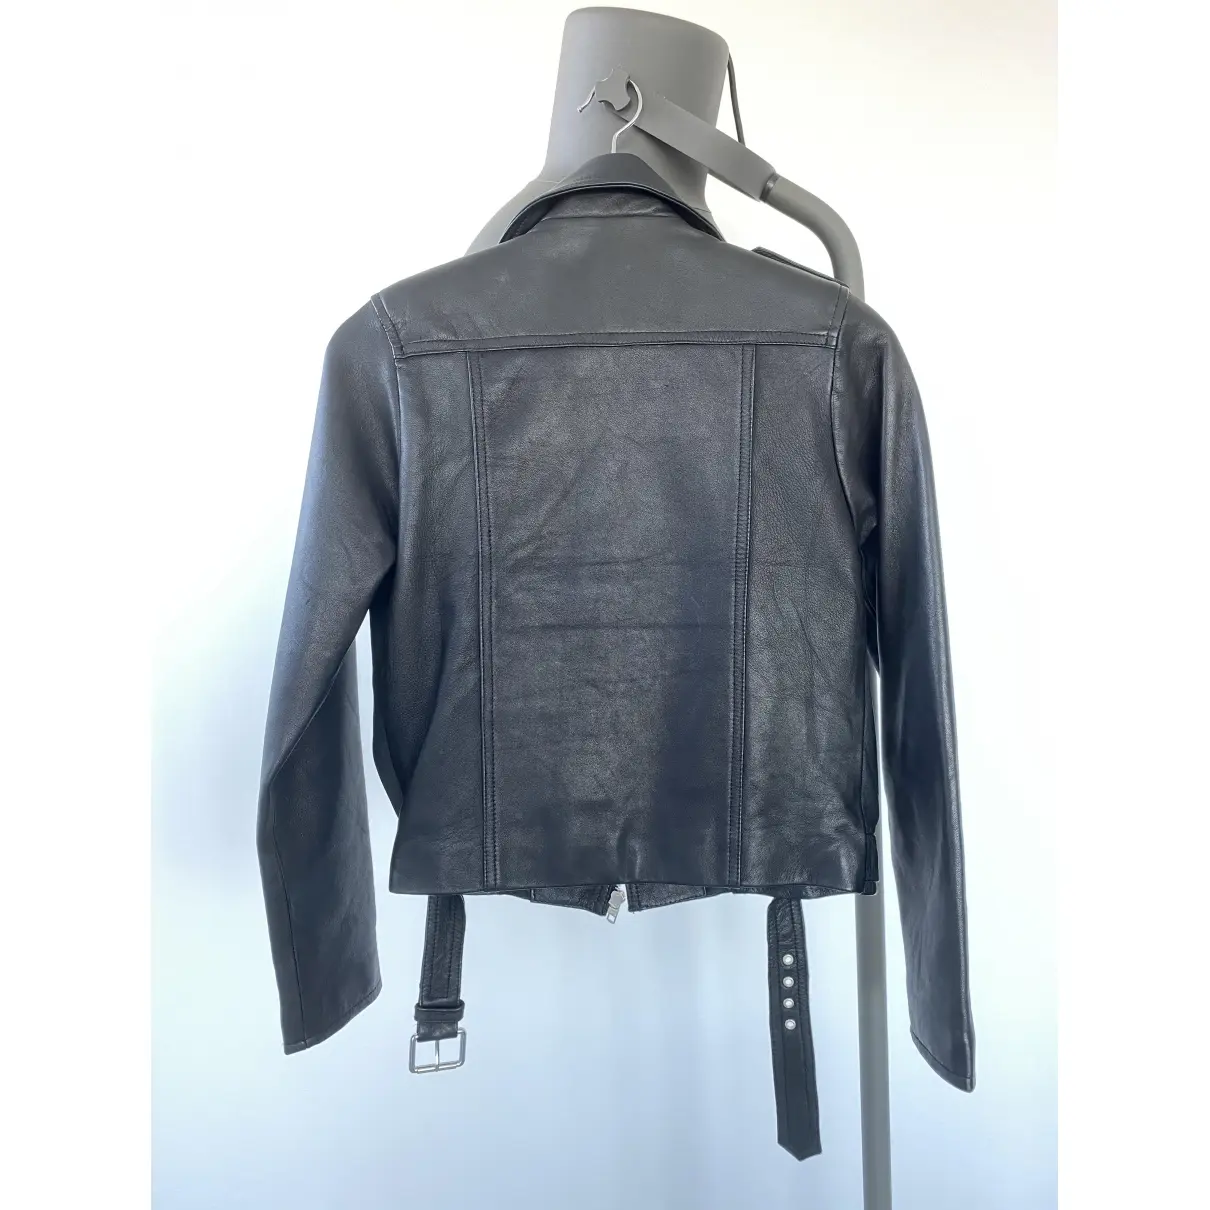 Buy Sir Leather jacket online